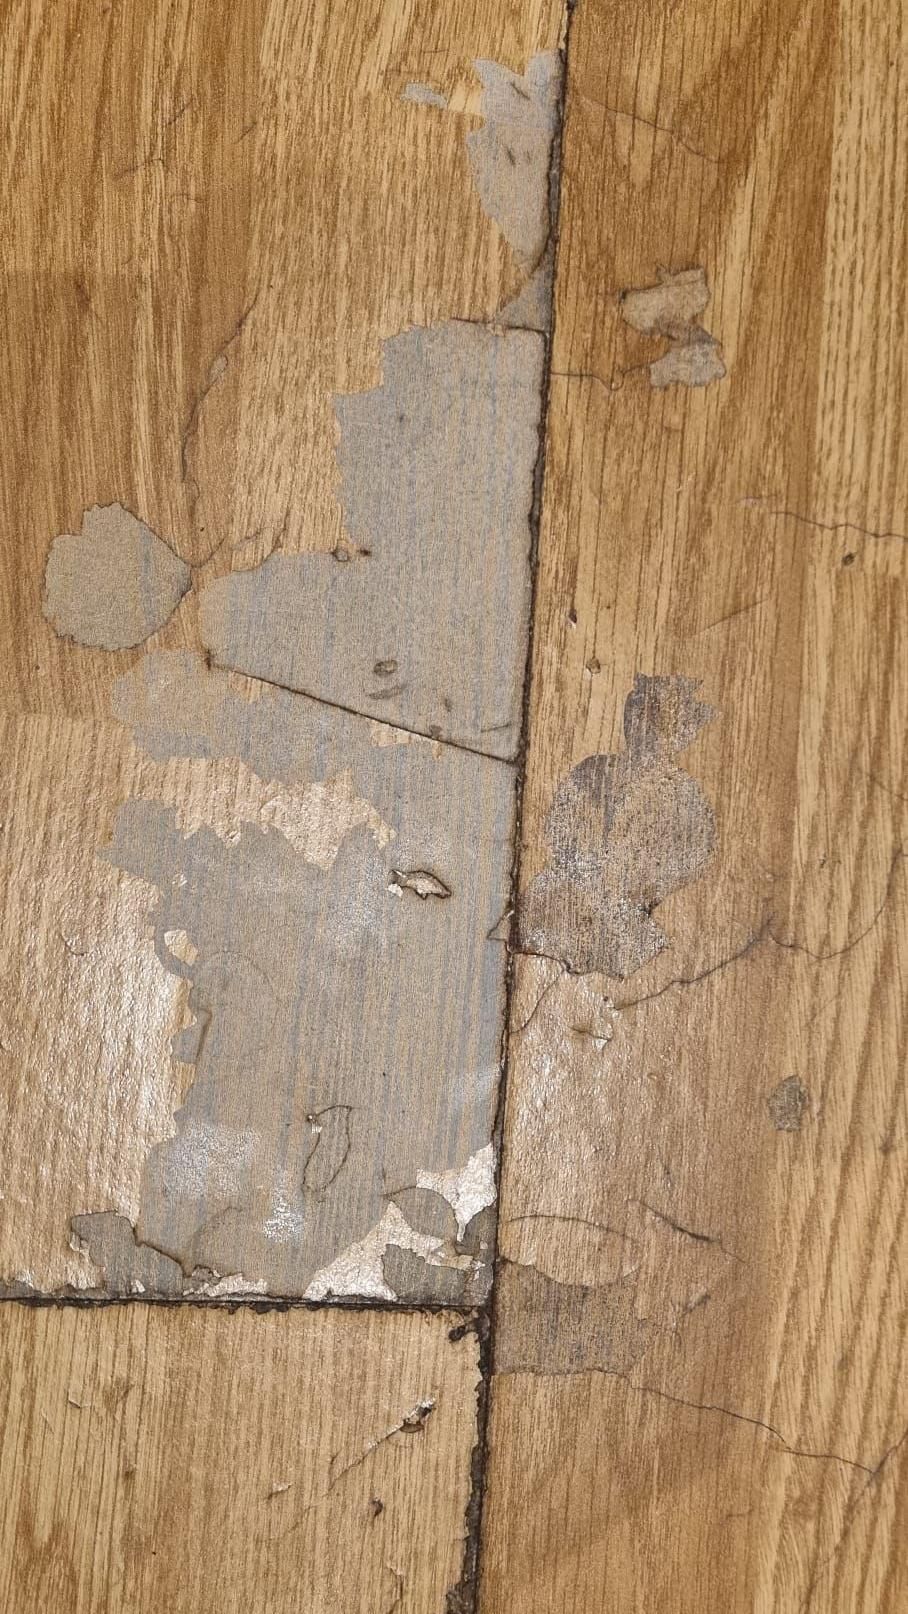 Damage to flooring 